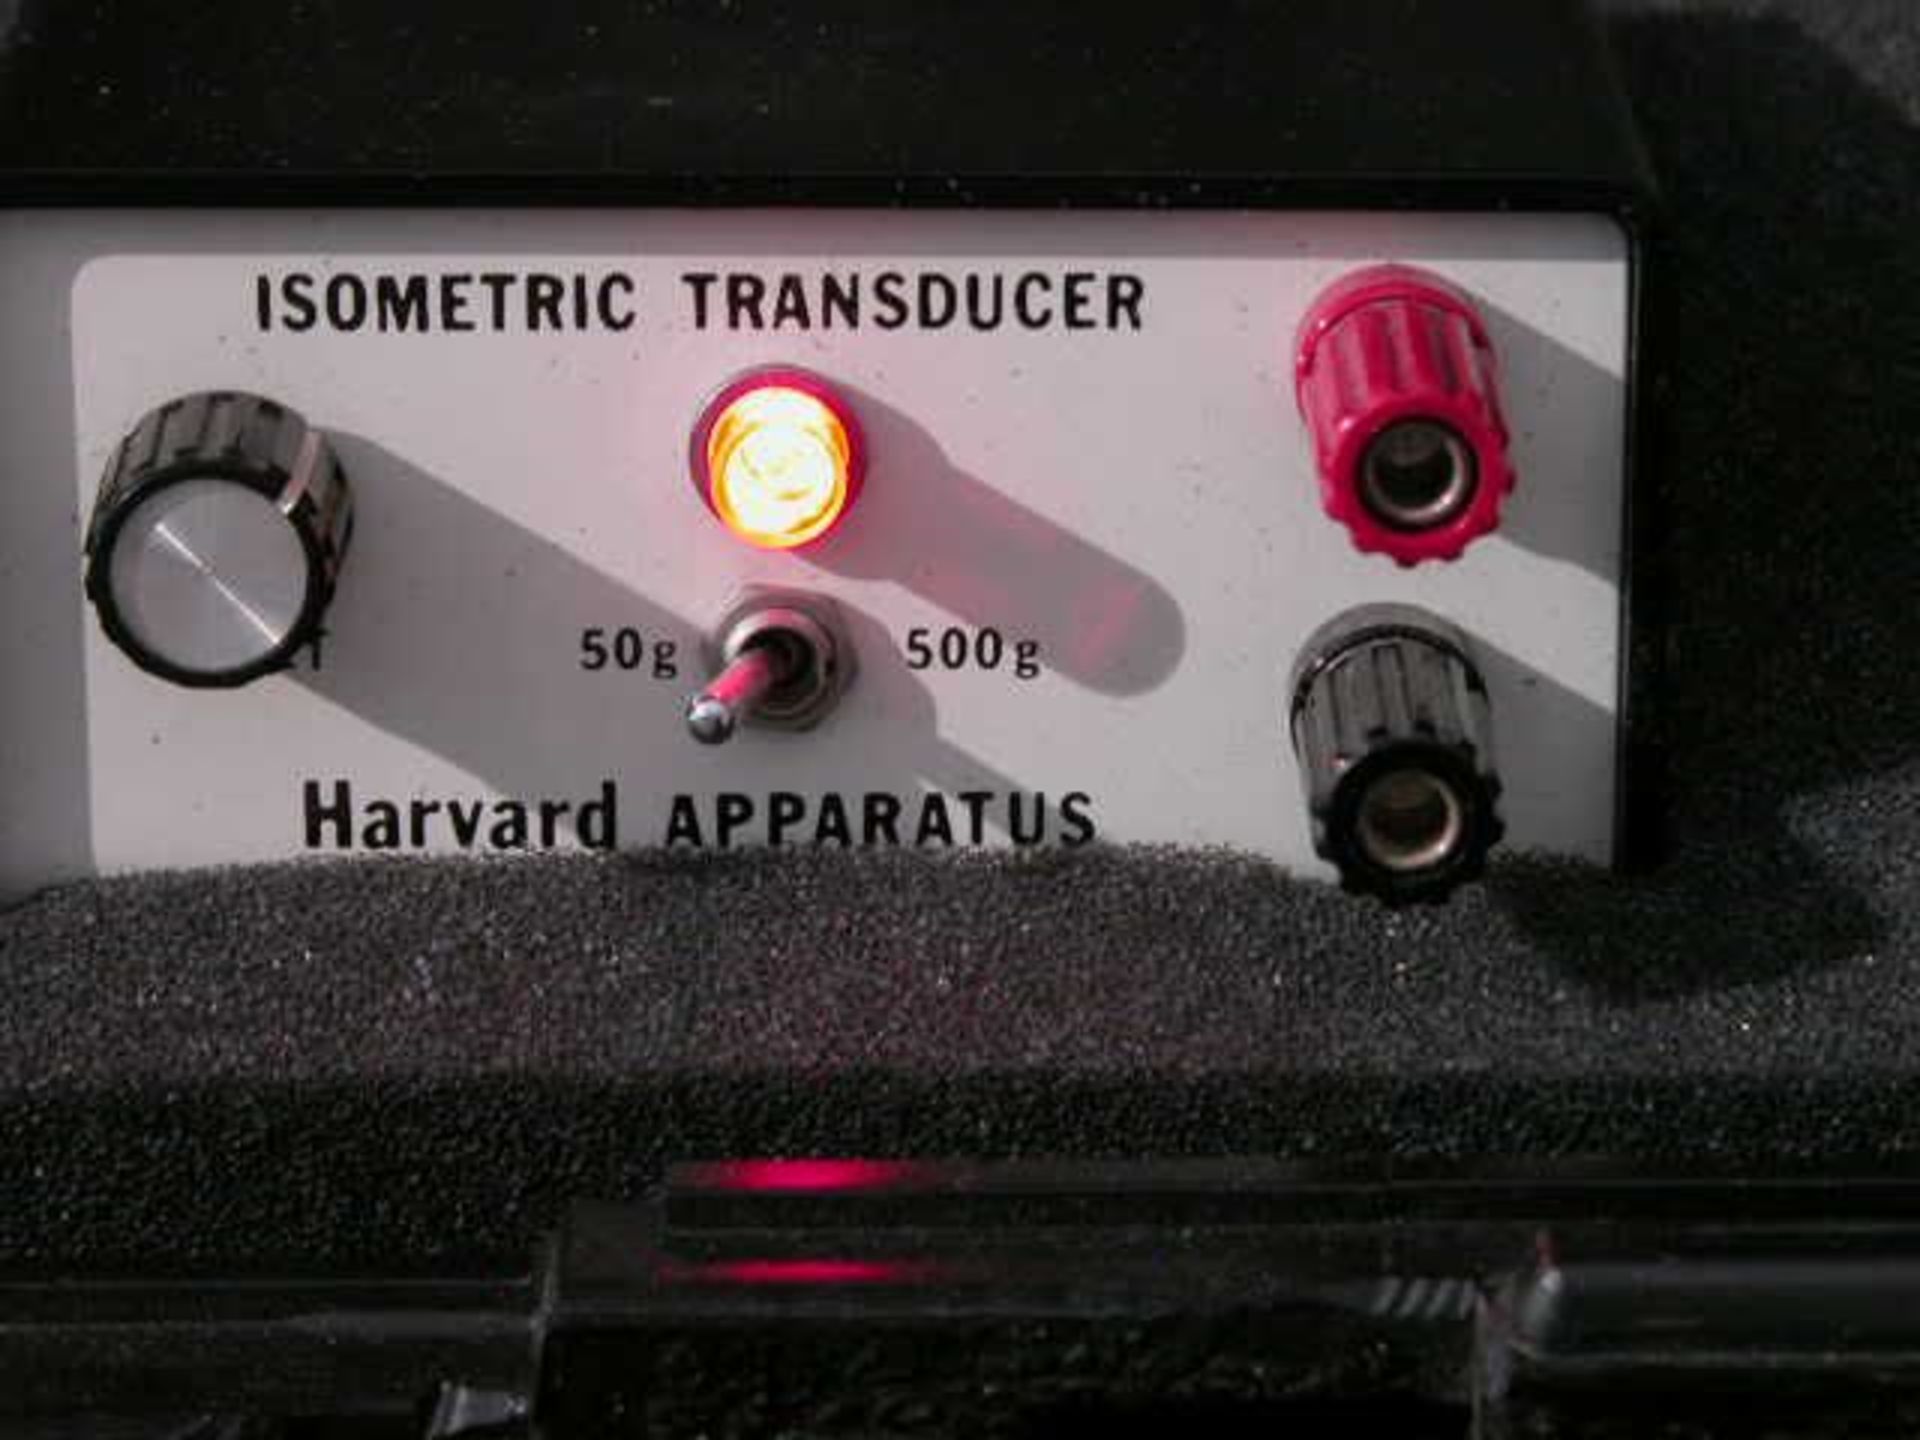 Harvard Apparatus Isometric Transducer 52-9503, Qty 1, 221495691032 - Image 2 of 5